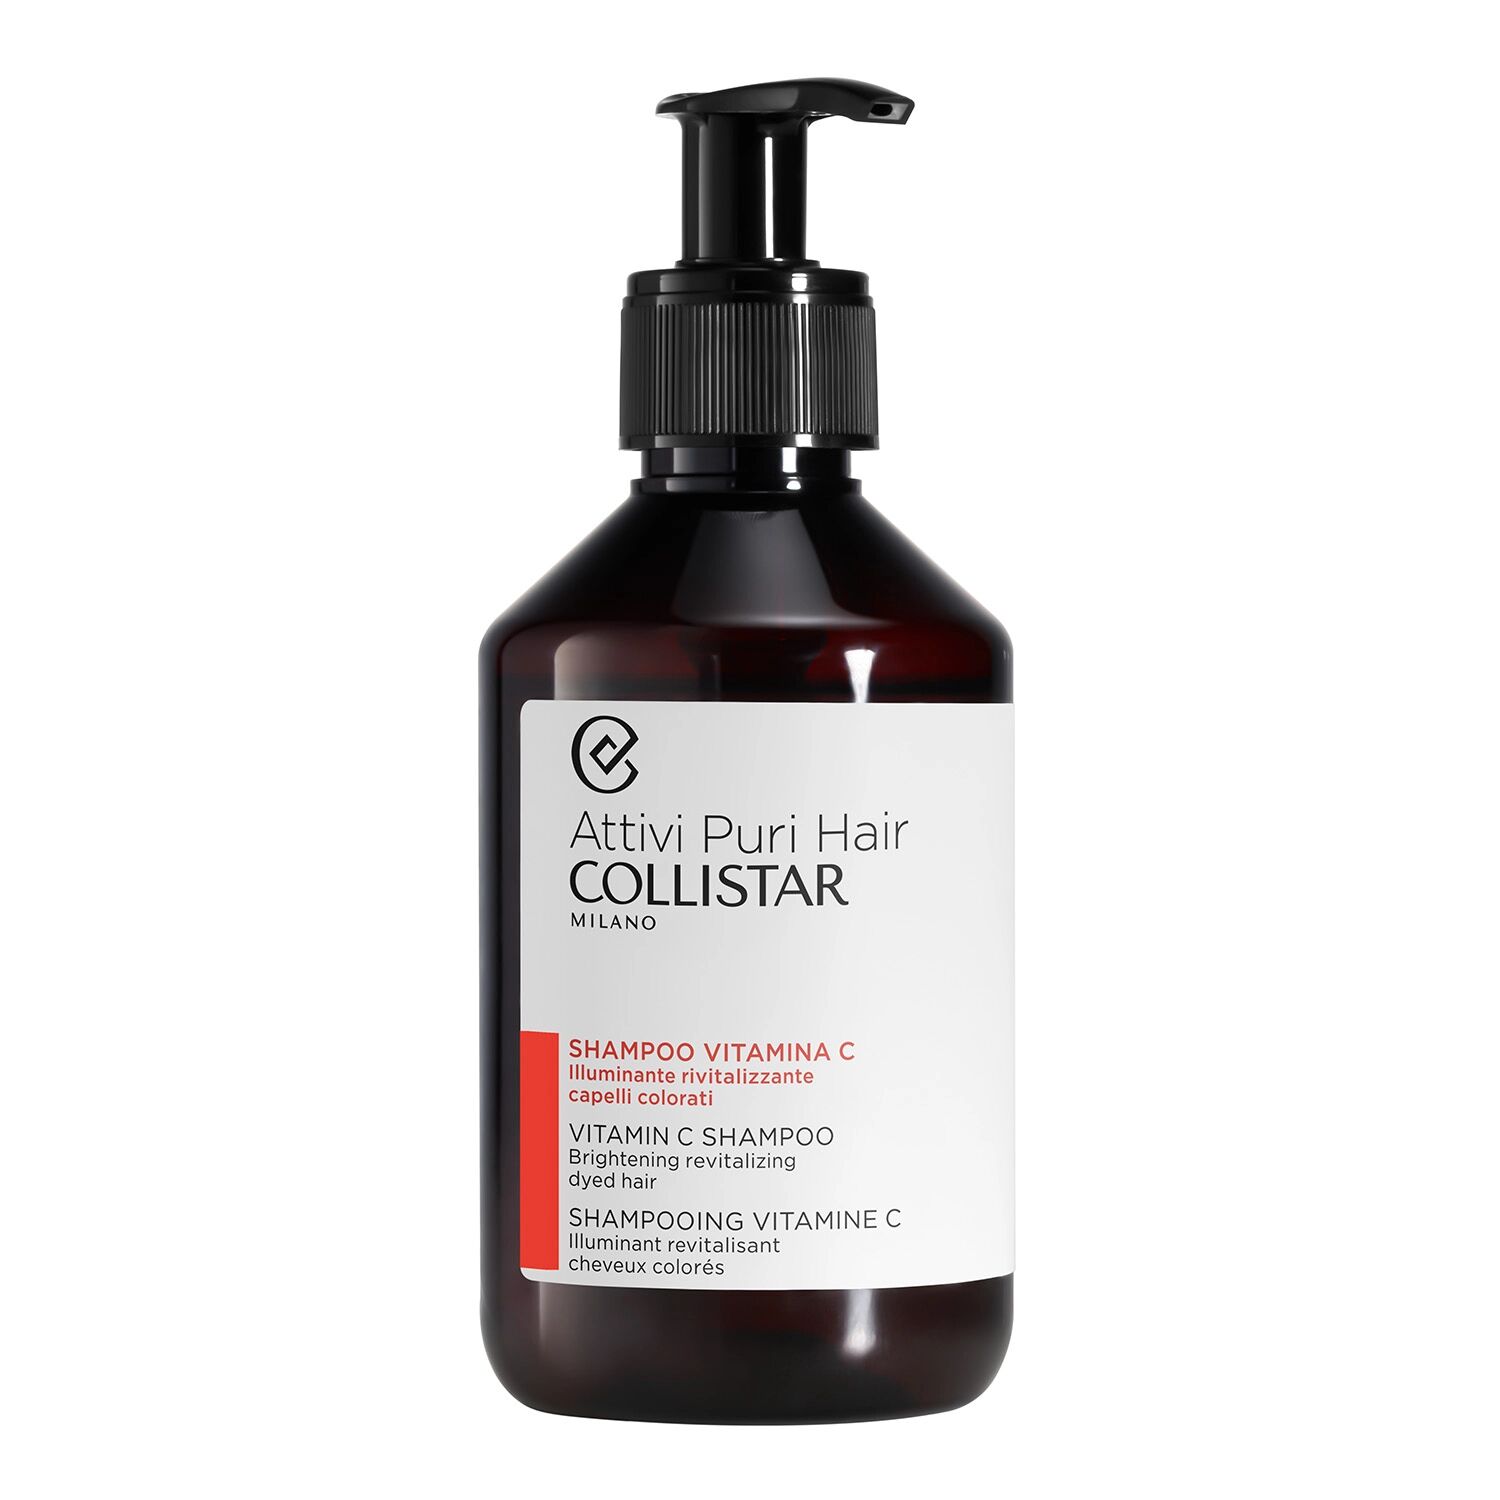 COLLISTAR Attivi Puri Hair Attivi Puri Hair Shampoo Vitamina C Illuminante 250 ml